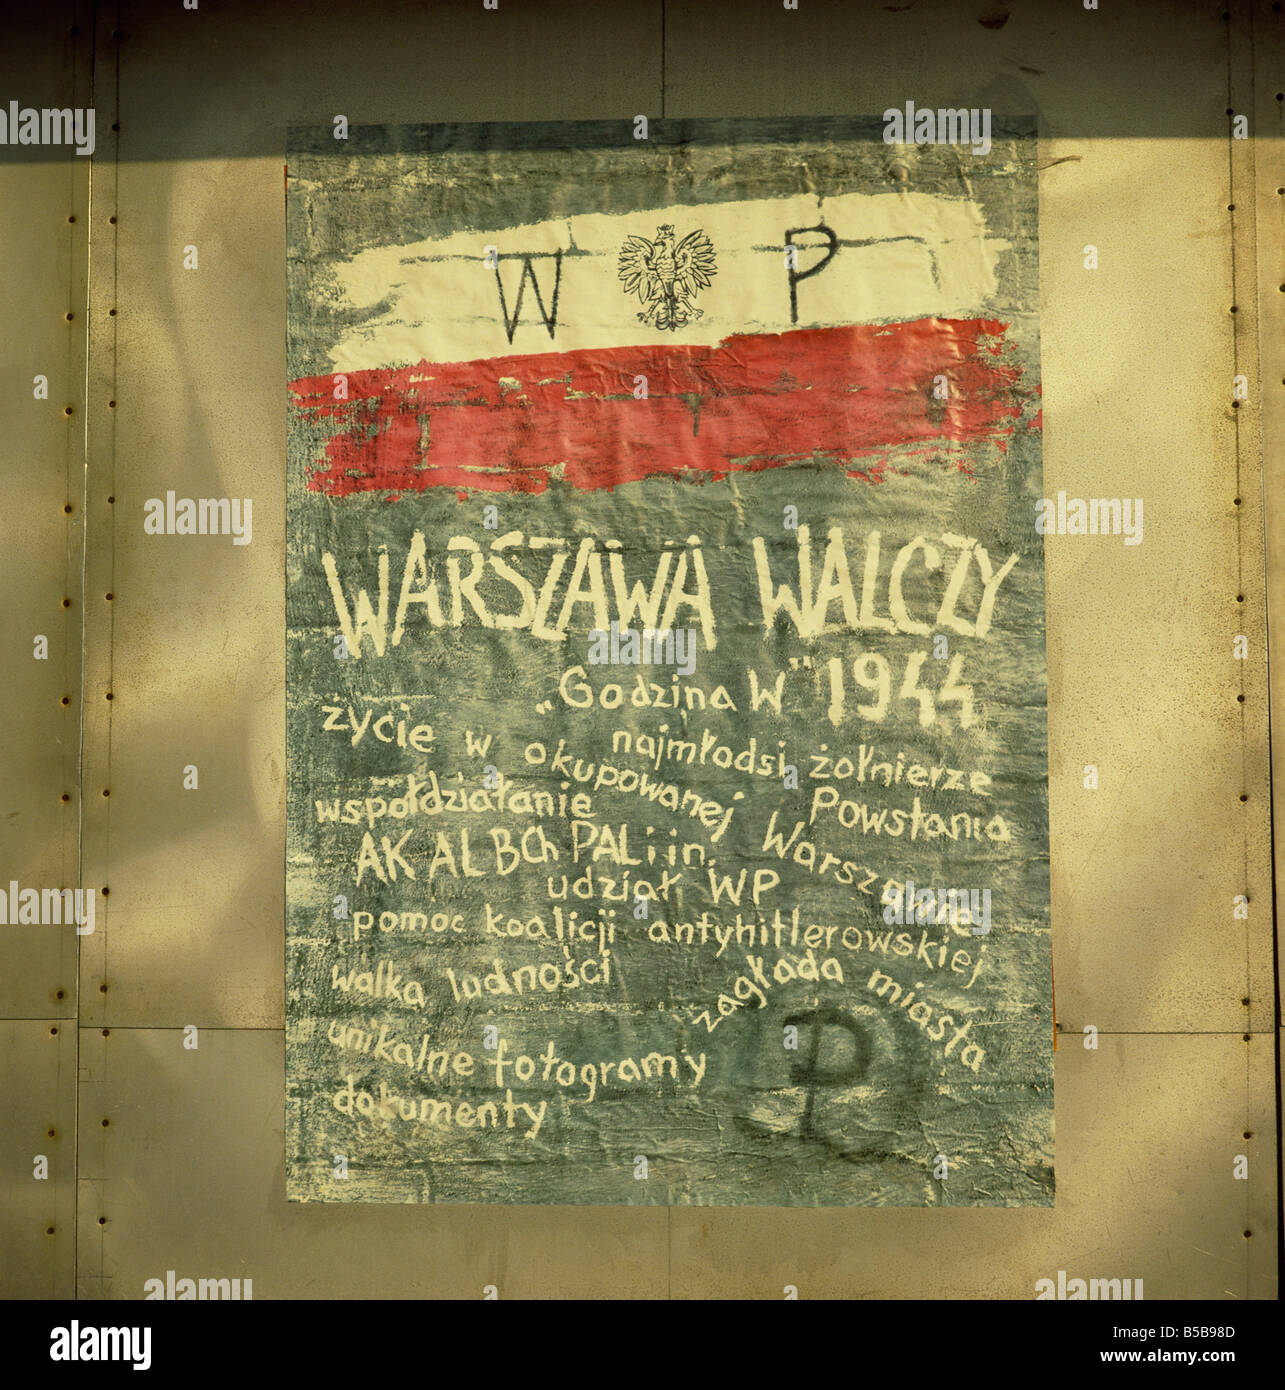 Poster of the 1944 Warsaw Uprising, Warsaw Uprising Monument, Warsaw, Poland, Europe Stock Photo